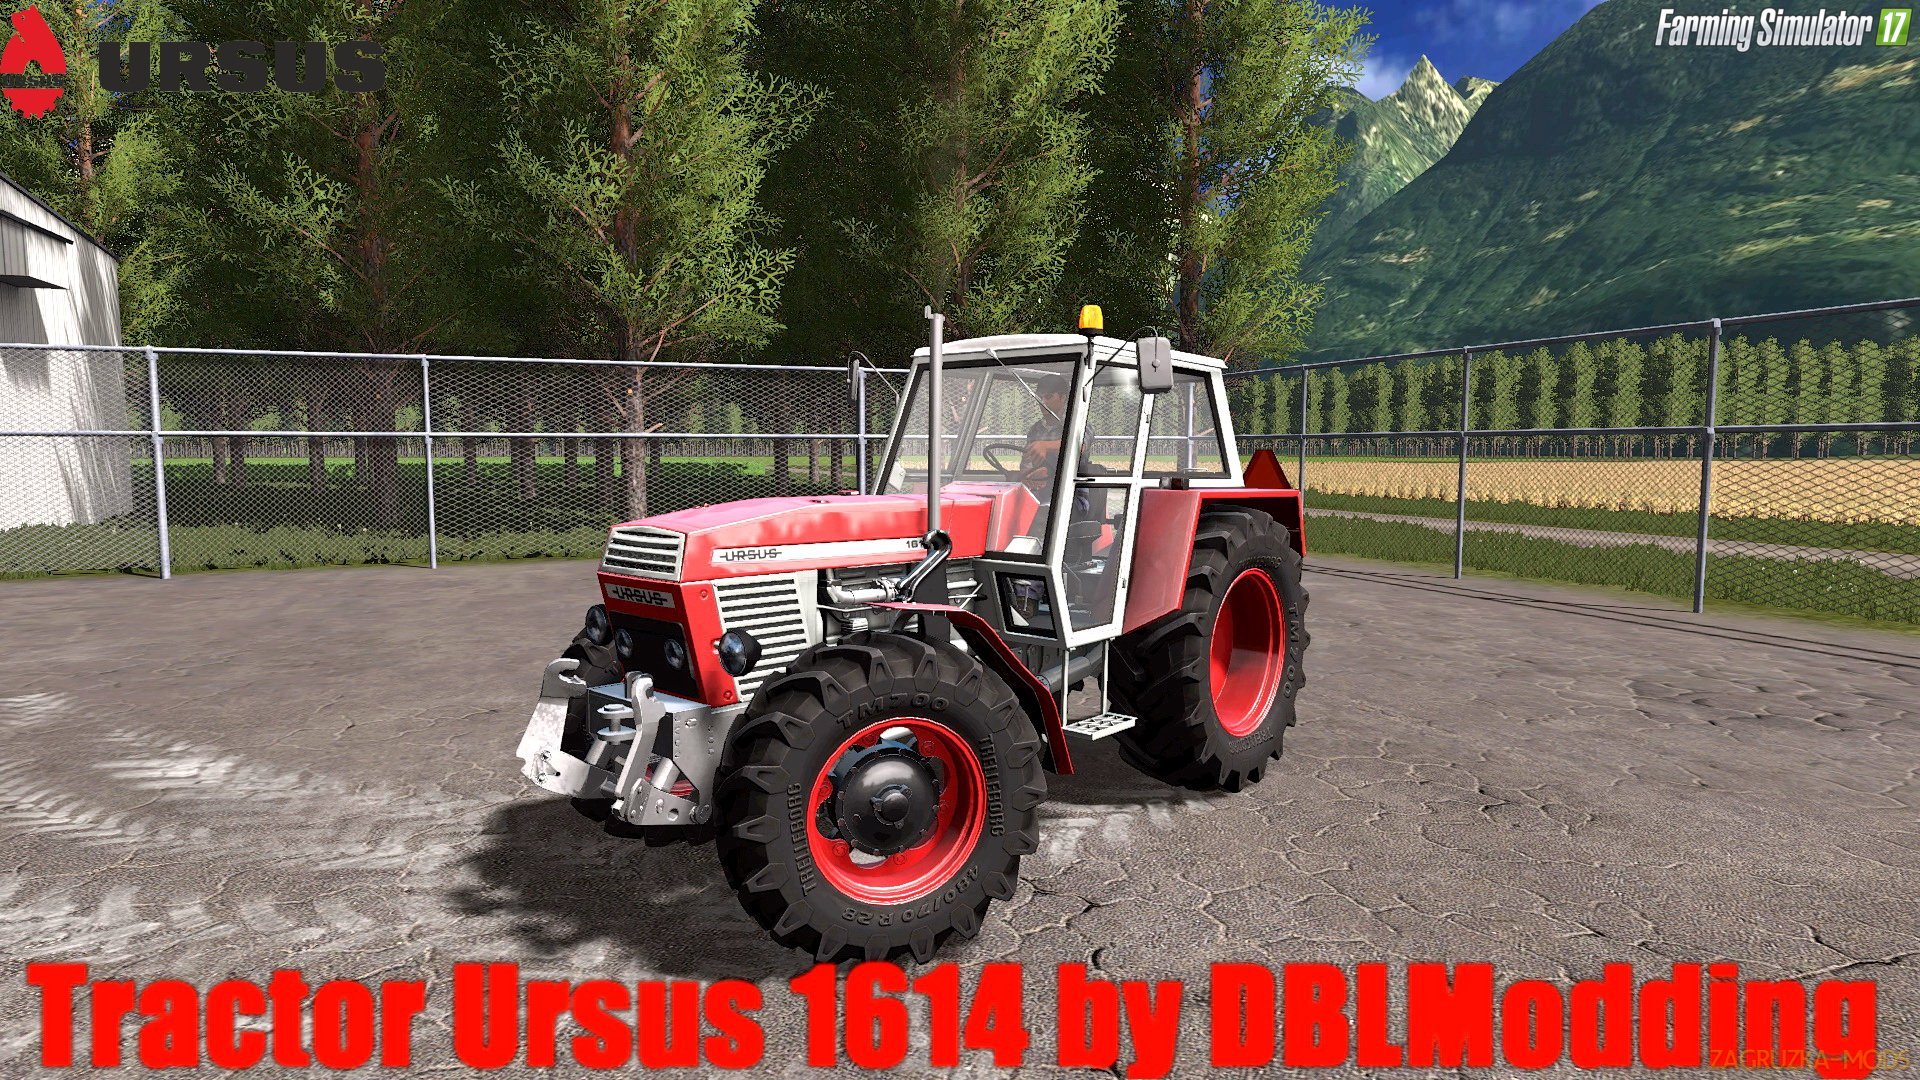 Ursus 1614 v1.0 by DBLModding for FS 17